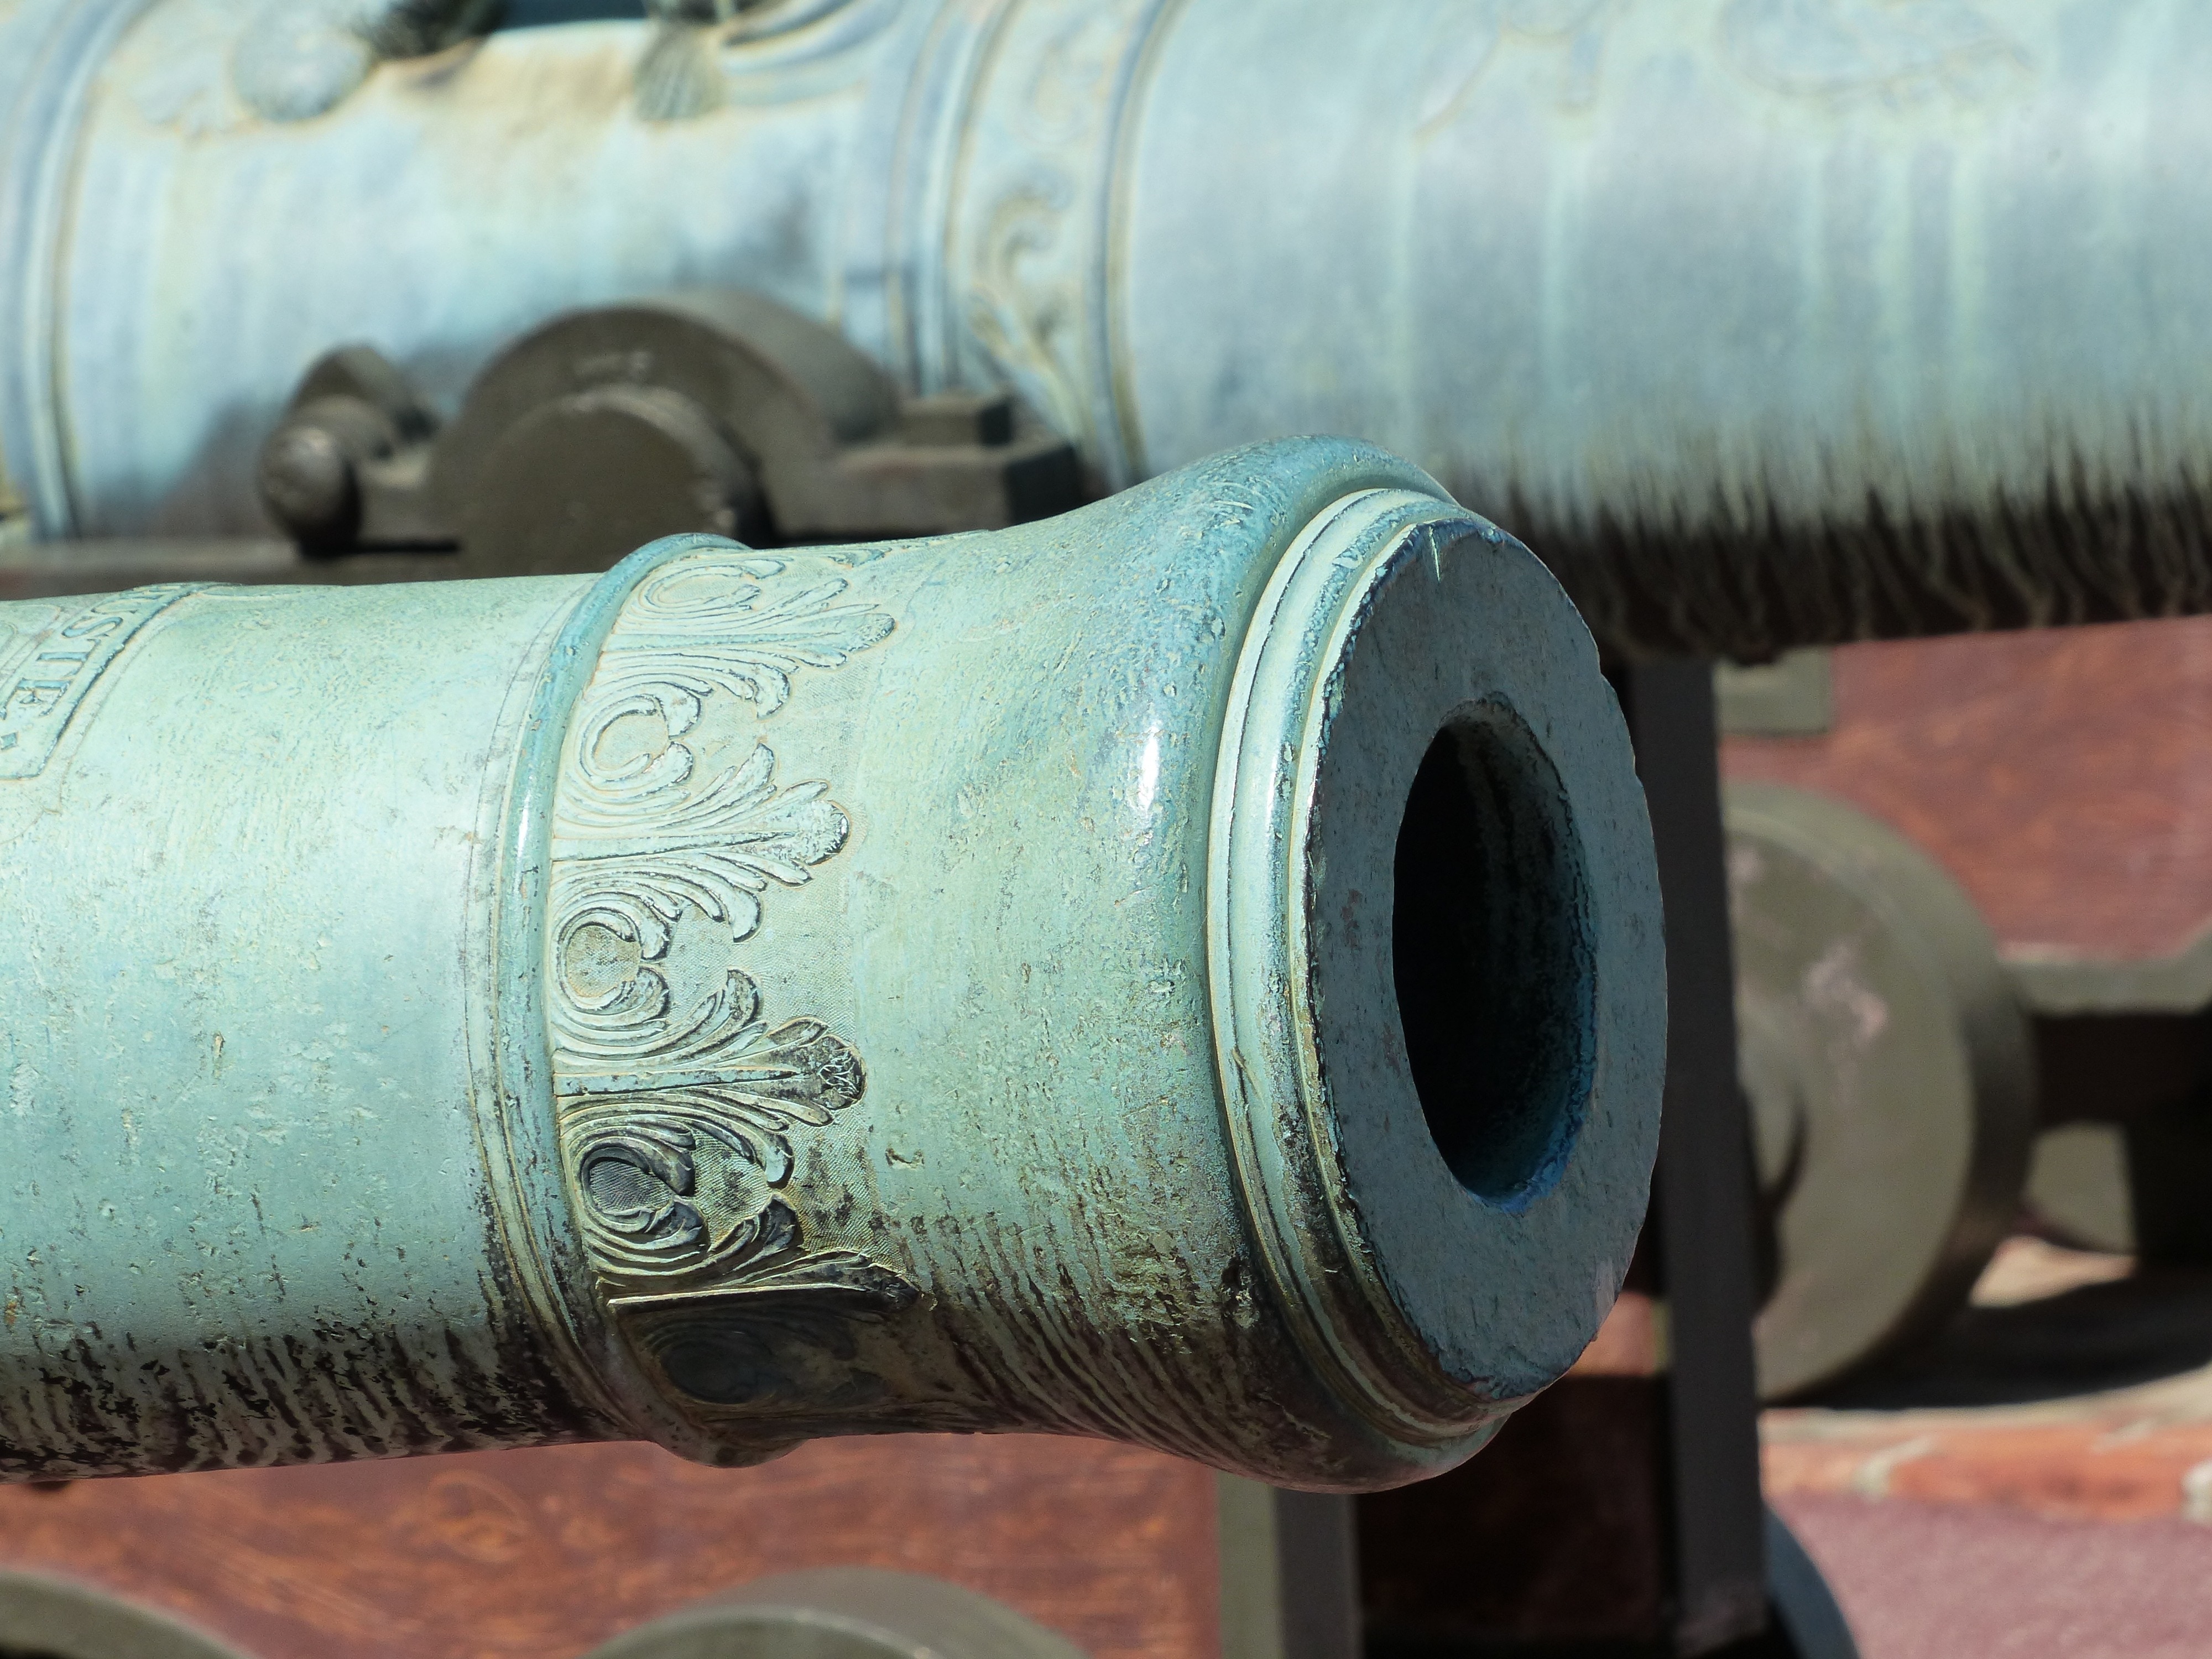 Bronze Cannon, Gun, Barrel Of A Gun, close-up, no people